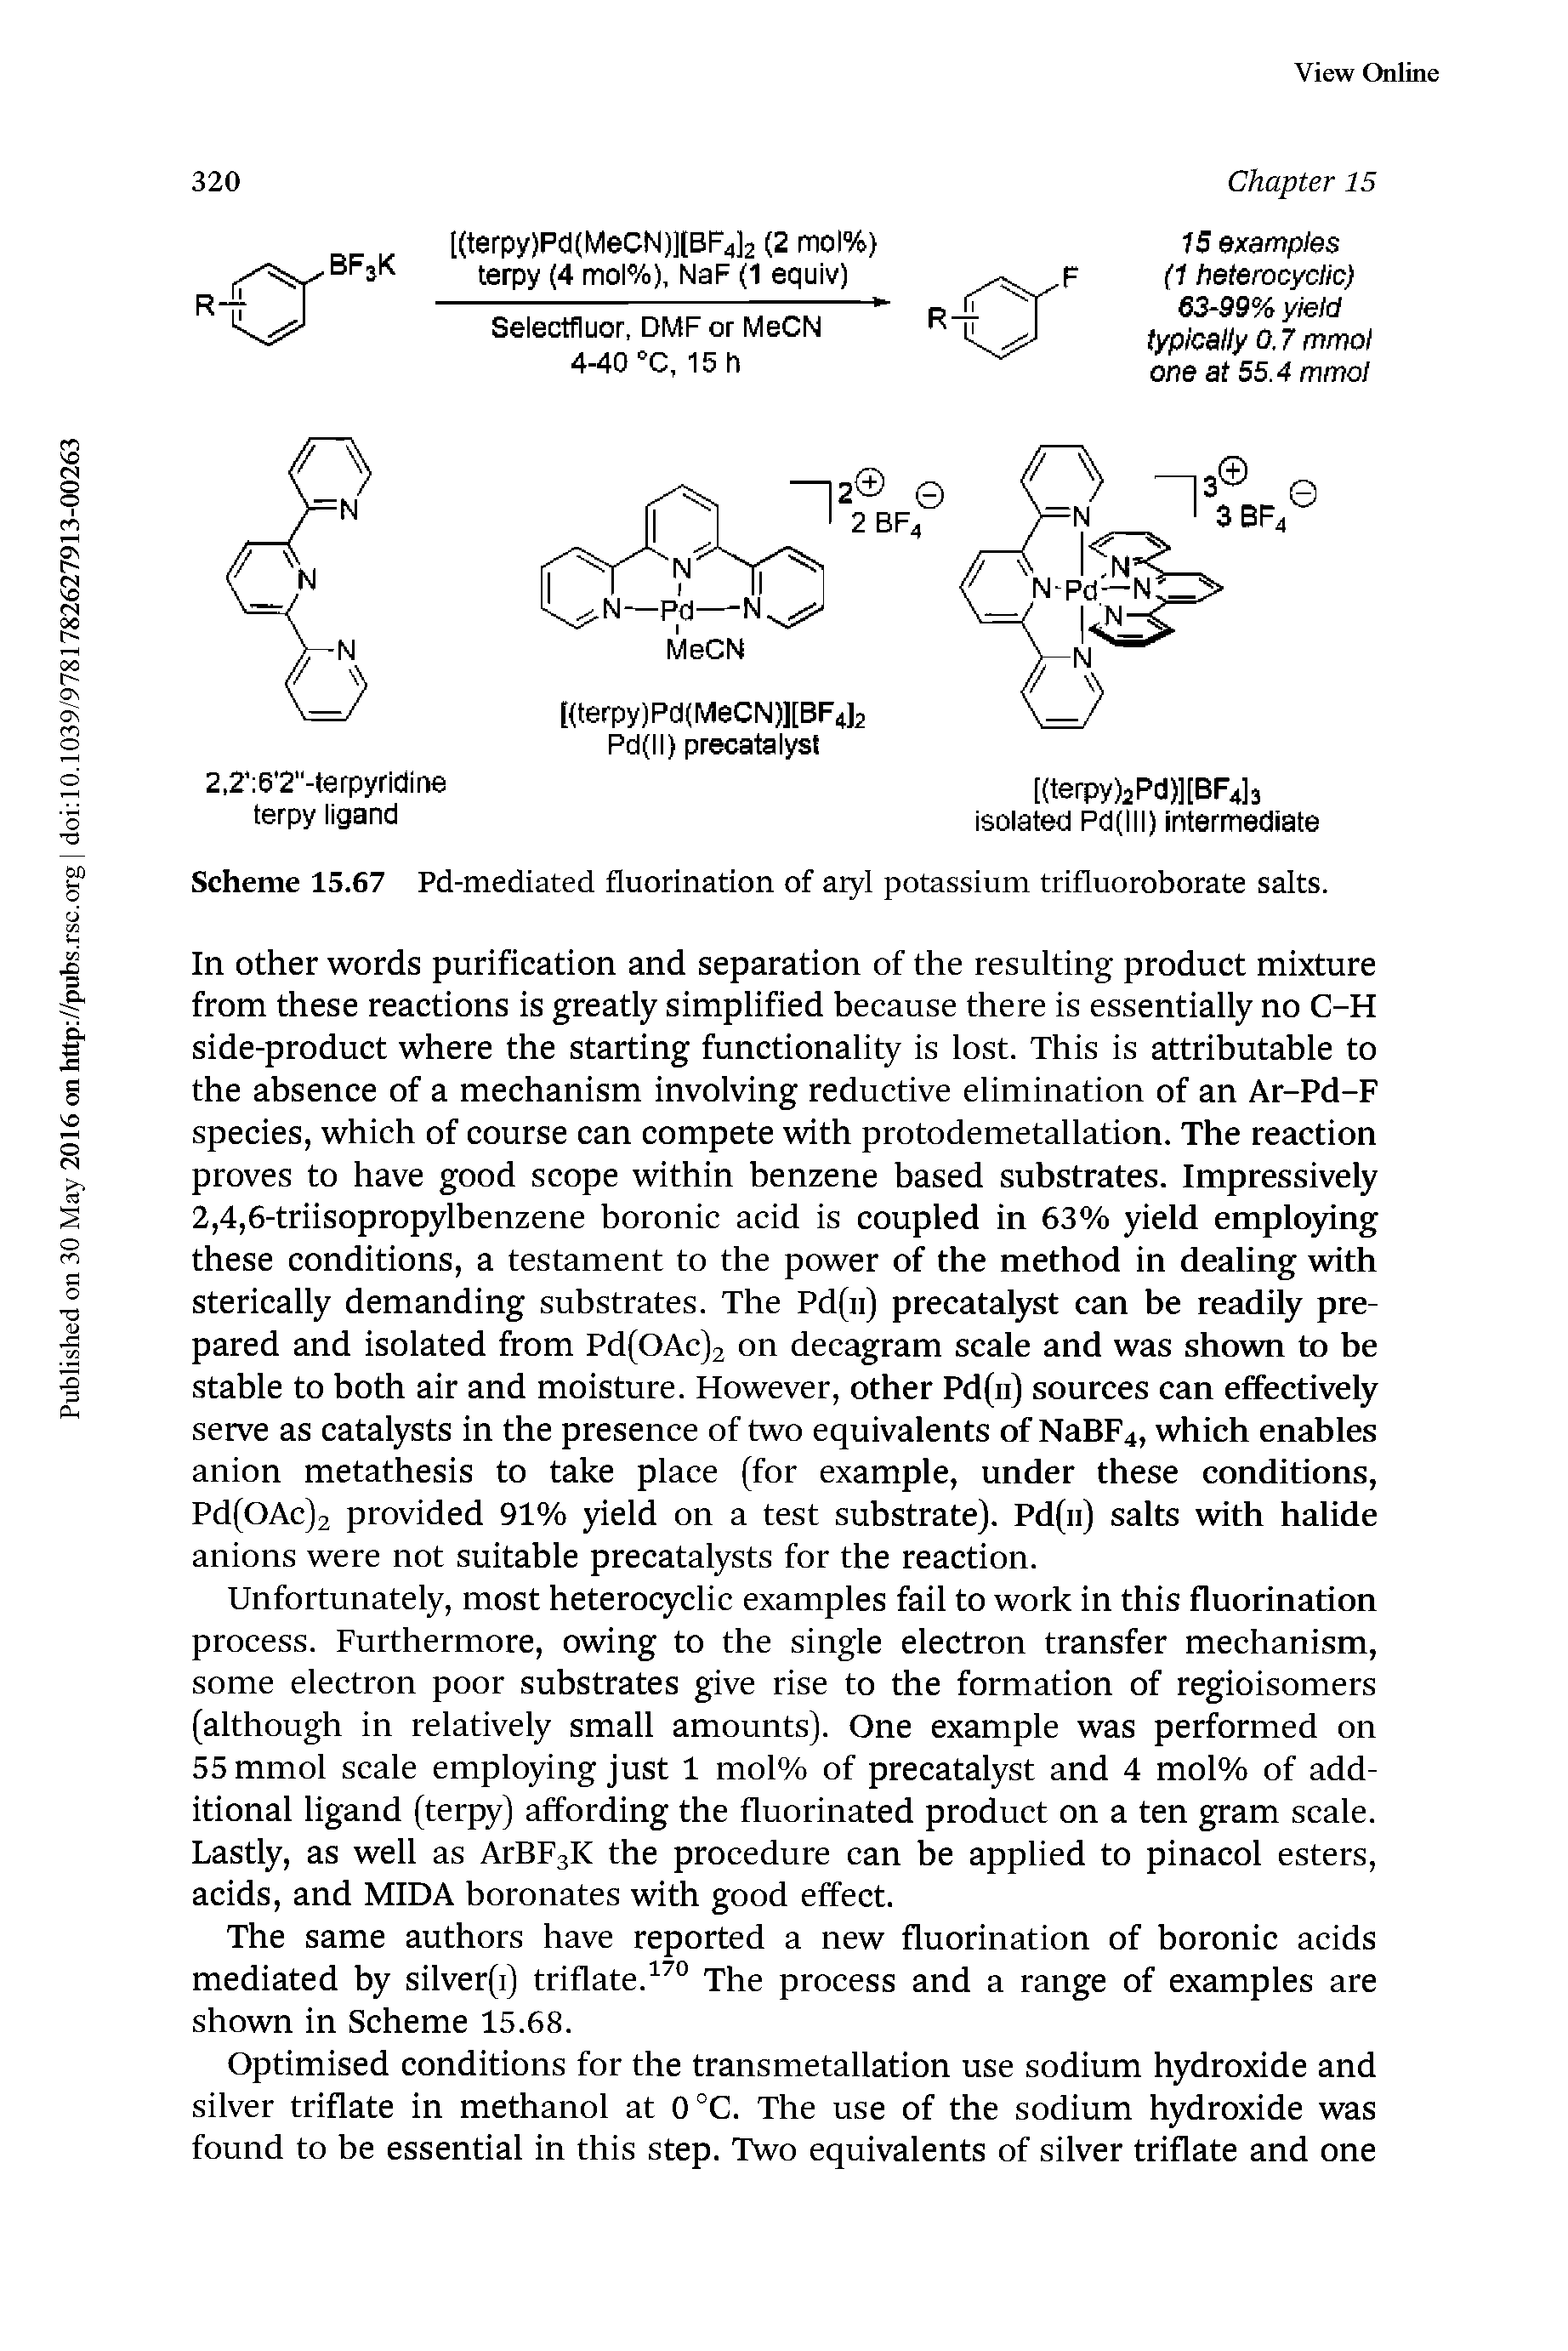 Scheme 15.67 Pd-mediated fluorination of aryl potassium trifluoroborate salts.